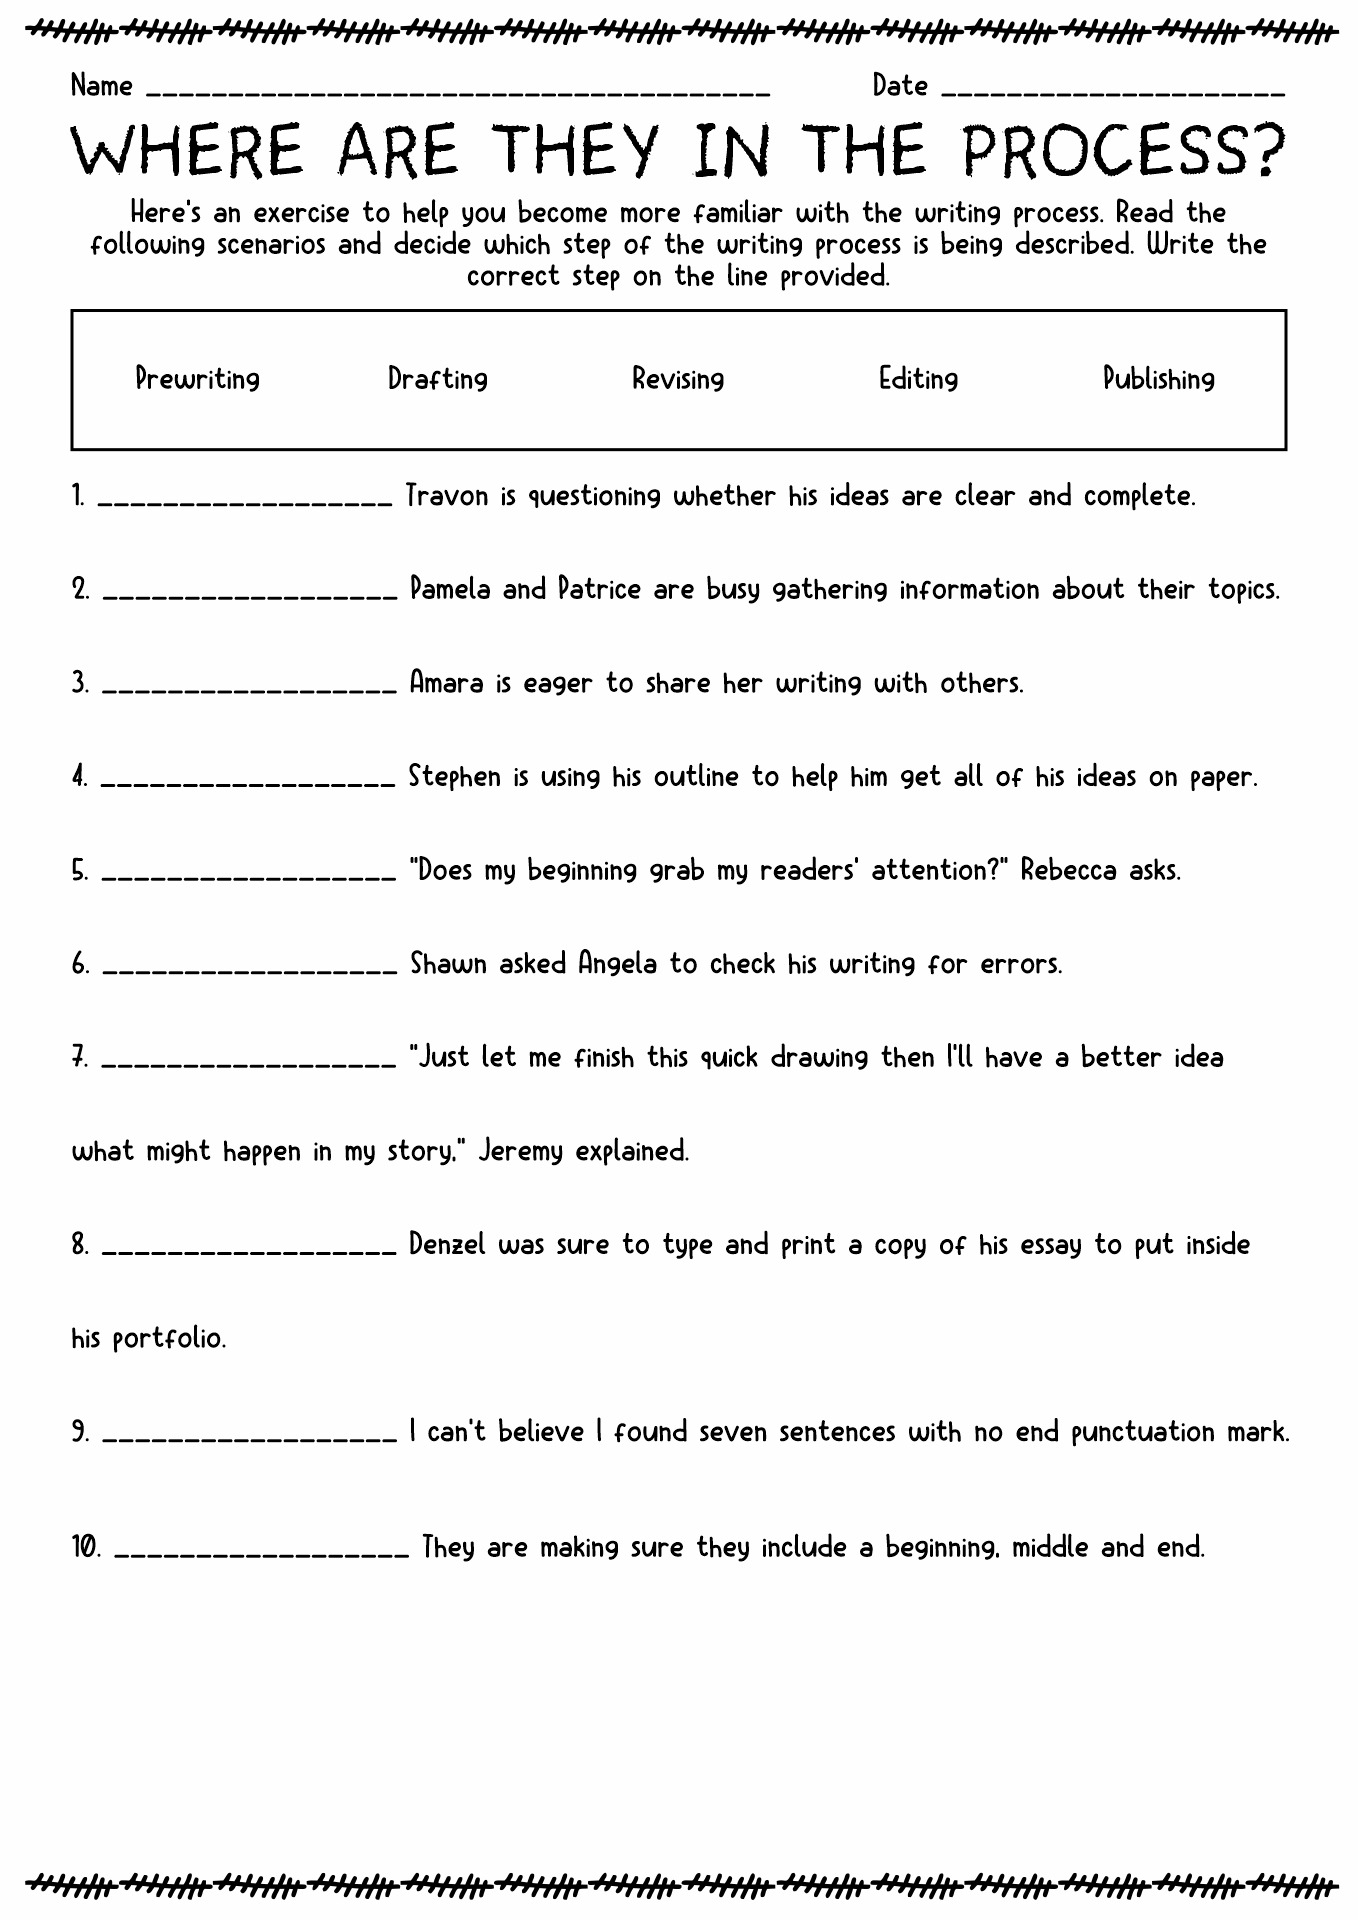 Writing Process Activity Worksheet Image